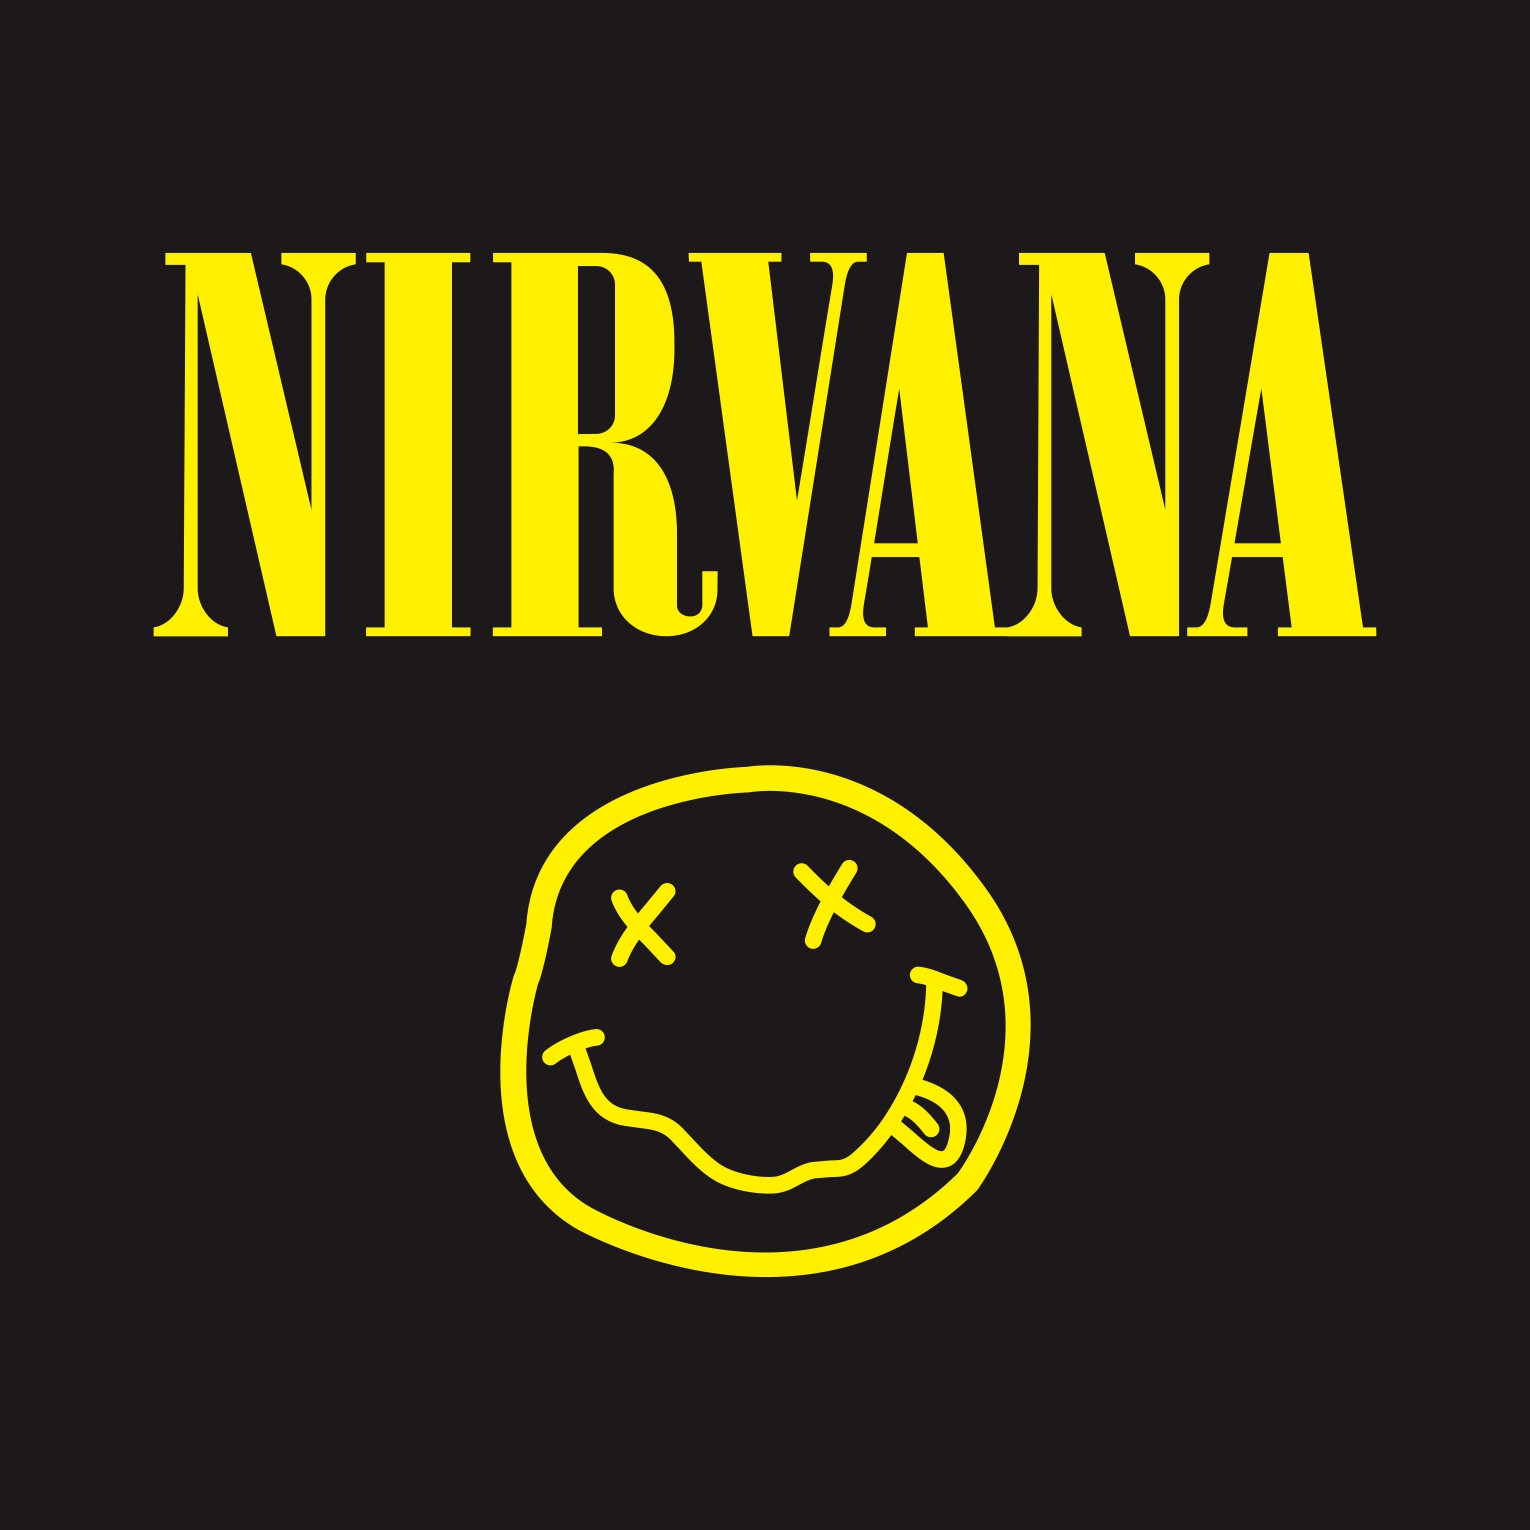 Nirvana act. Нирвана группа. Нирвана эмблема группы. Вики группа Нирвана. Группа Нирвана имена.